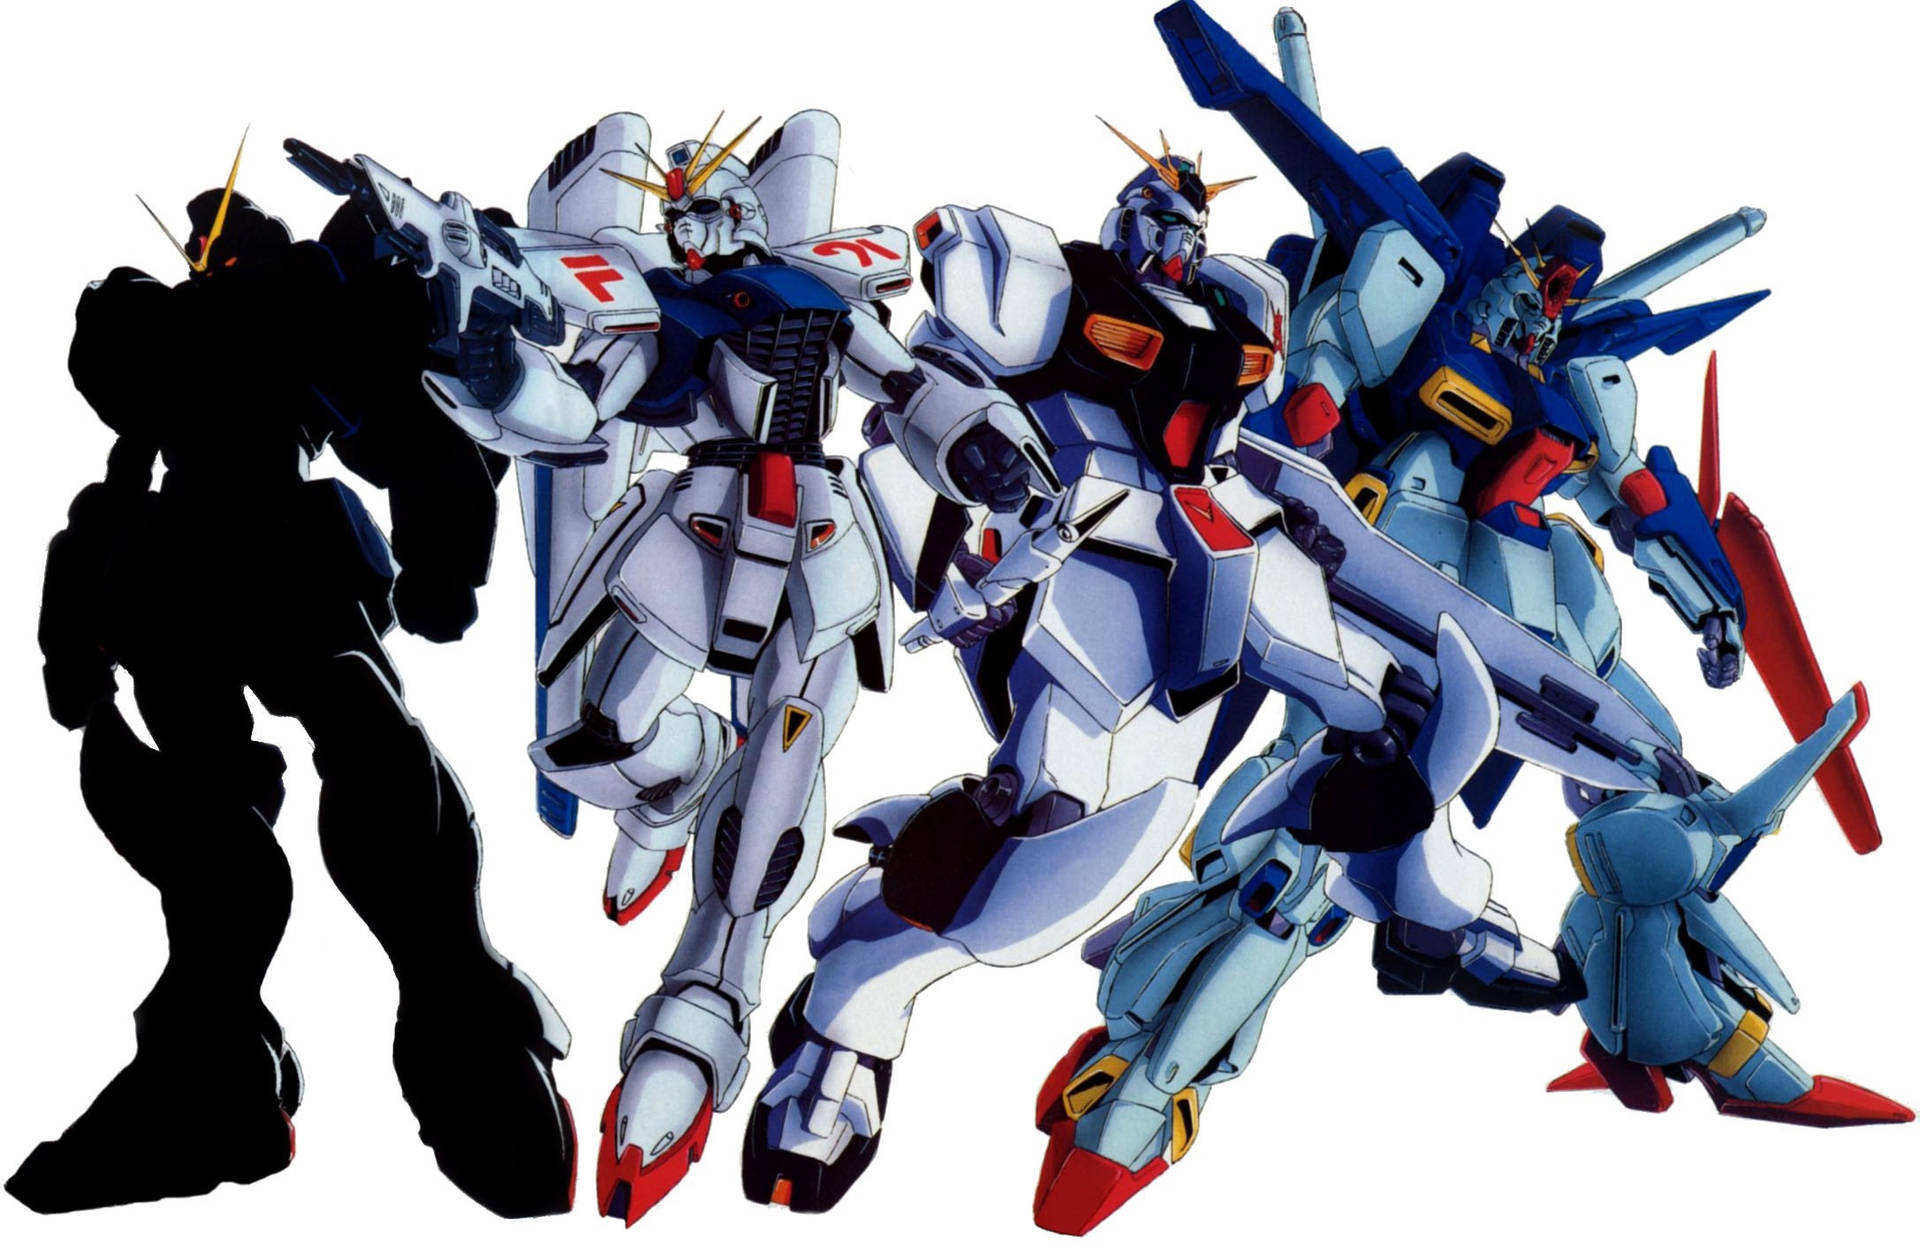 Impressive Mobile Suit Gundams In Action Background